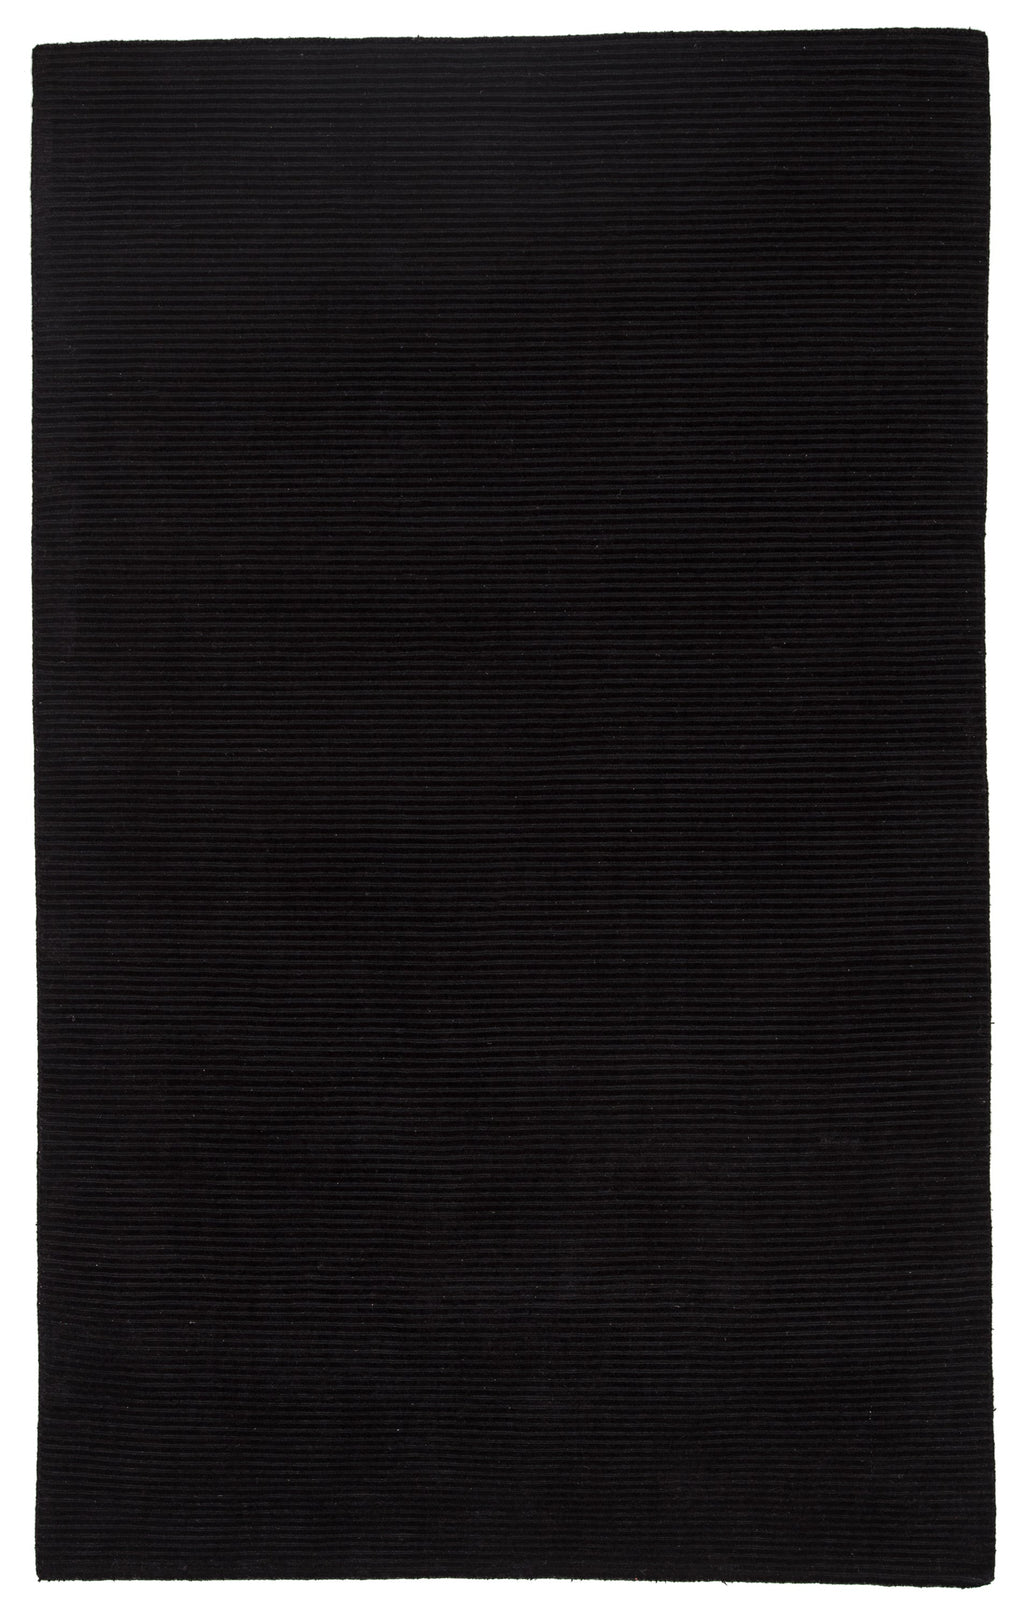 basis solid rug in jet black design by jaipur 1